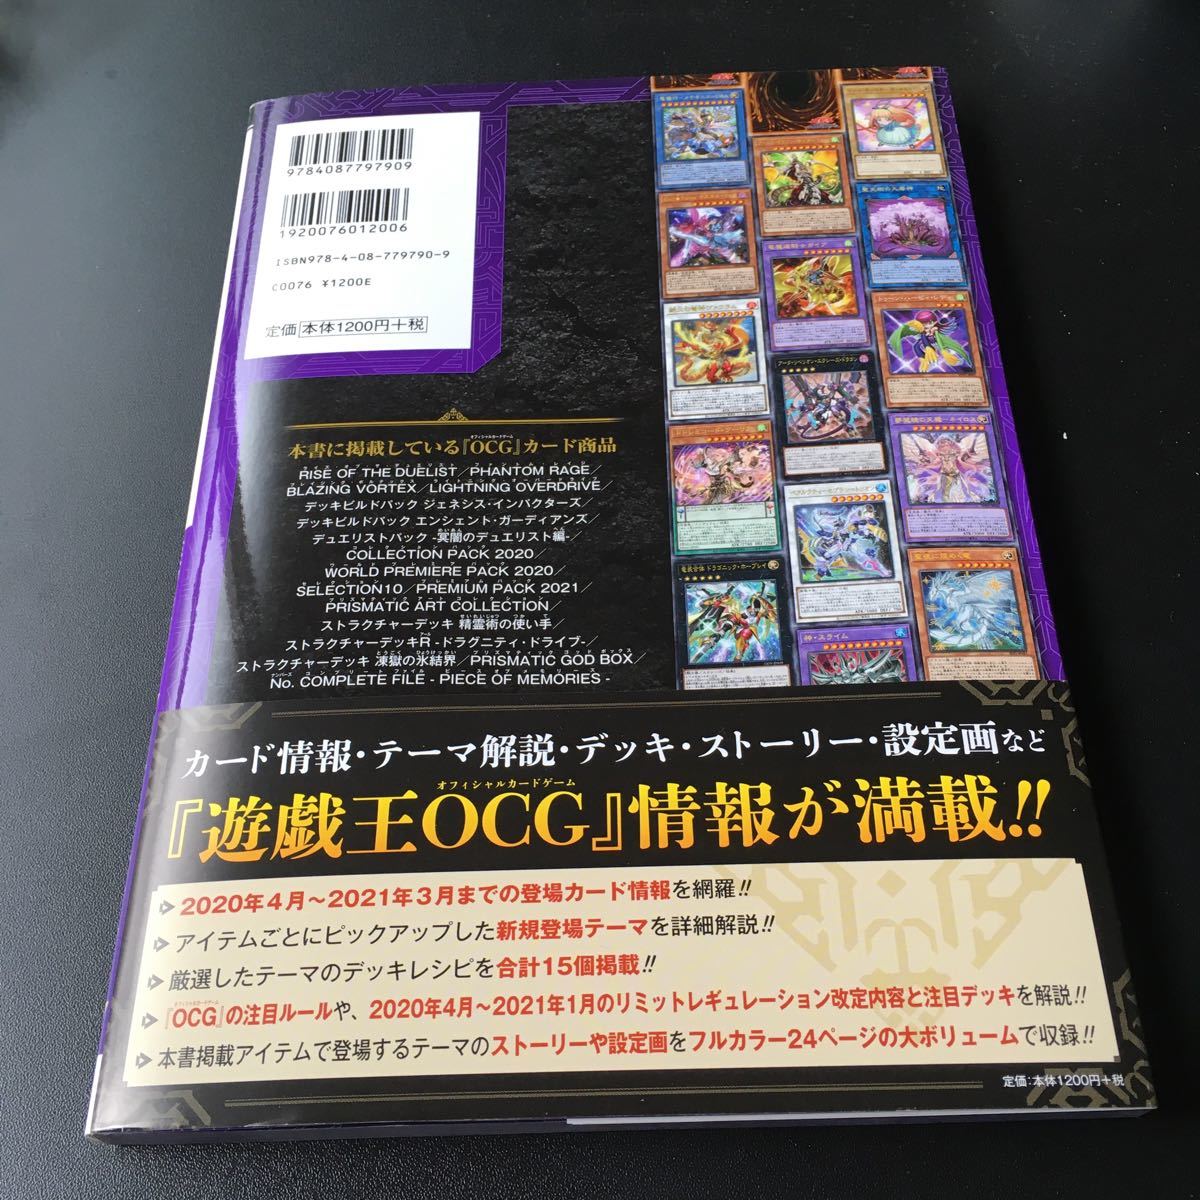 Paypayフリマ 遊戯王 公式カードカタログ ザ ヴァリアル ブックex